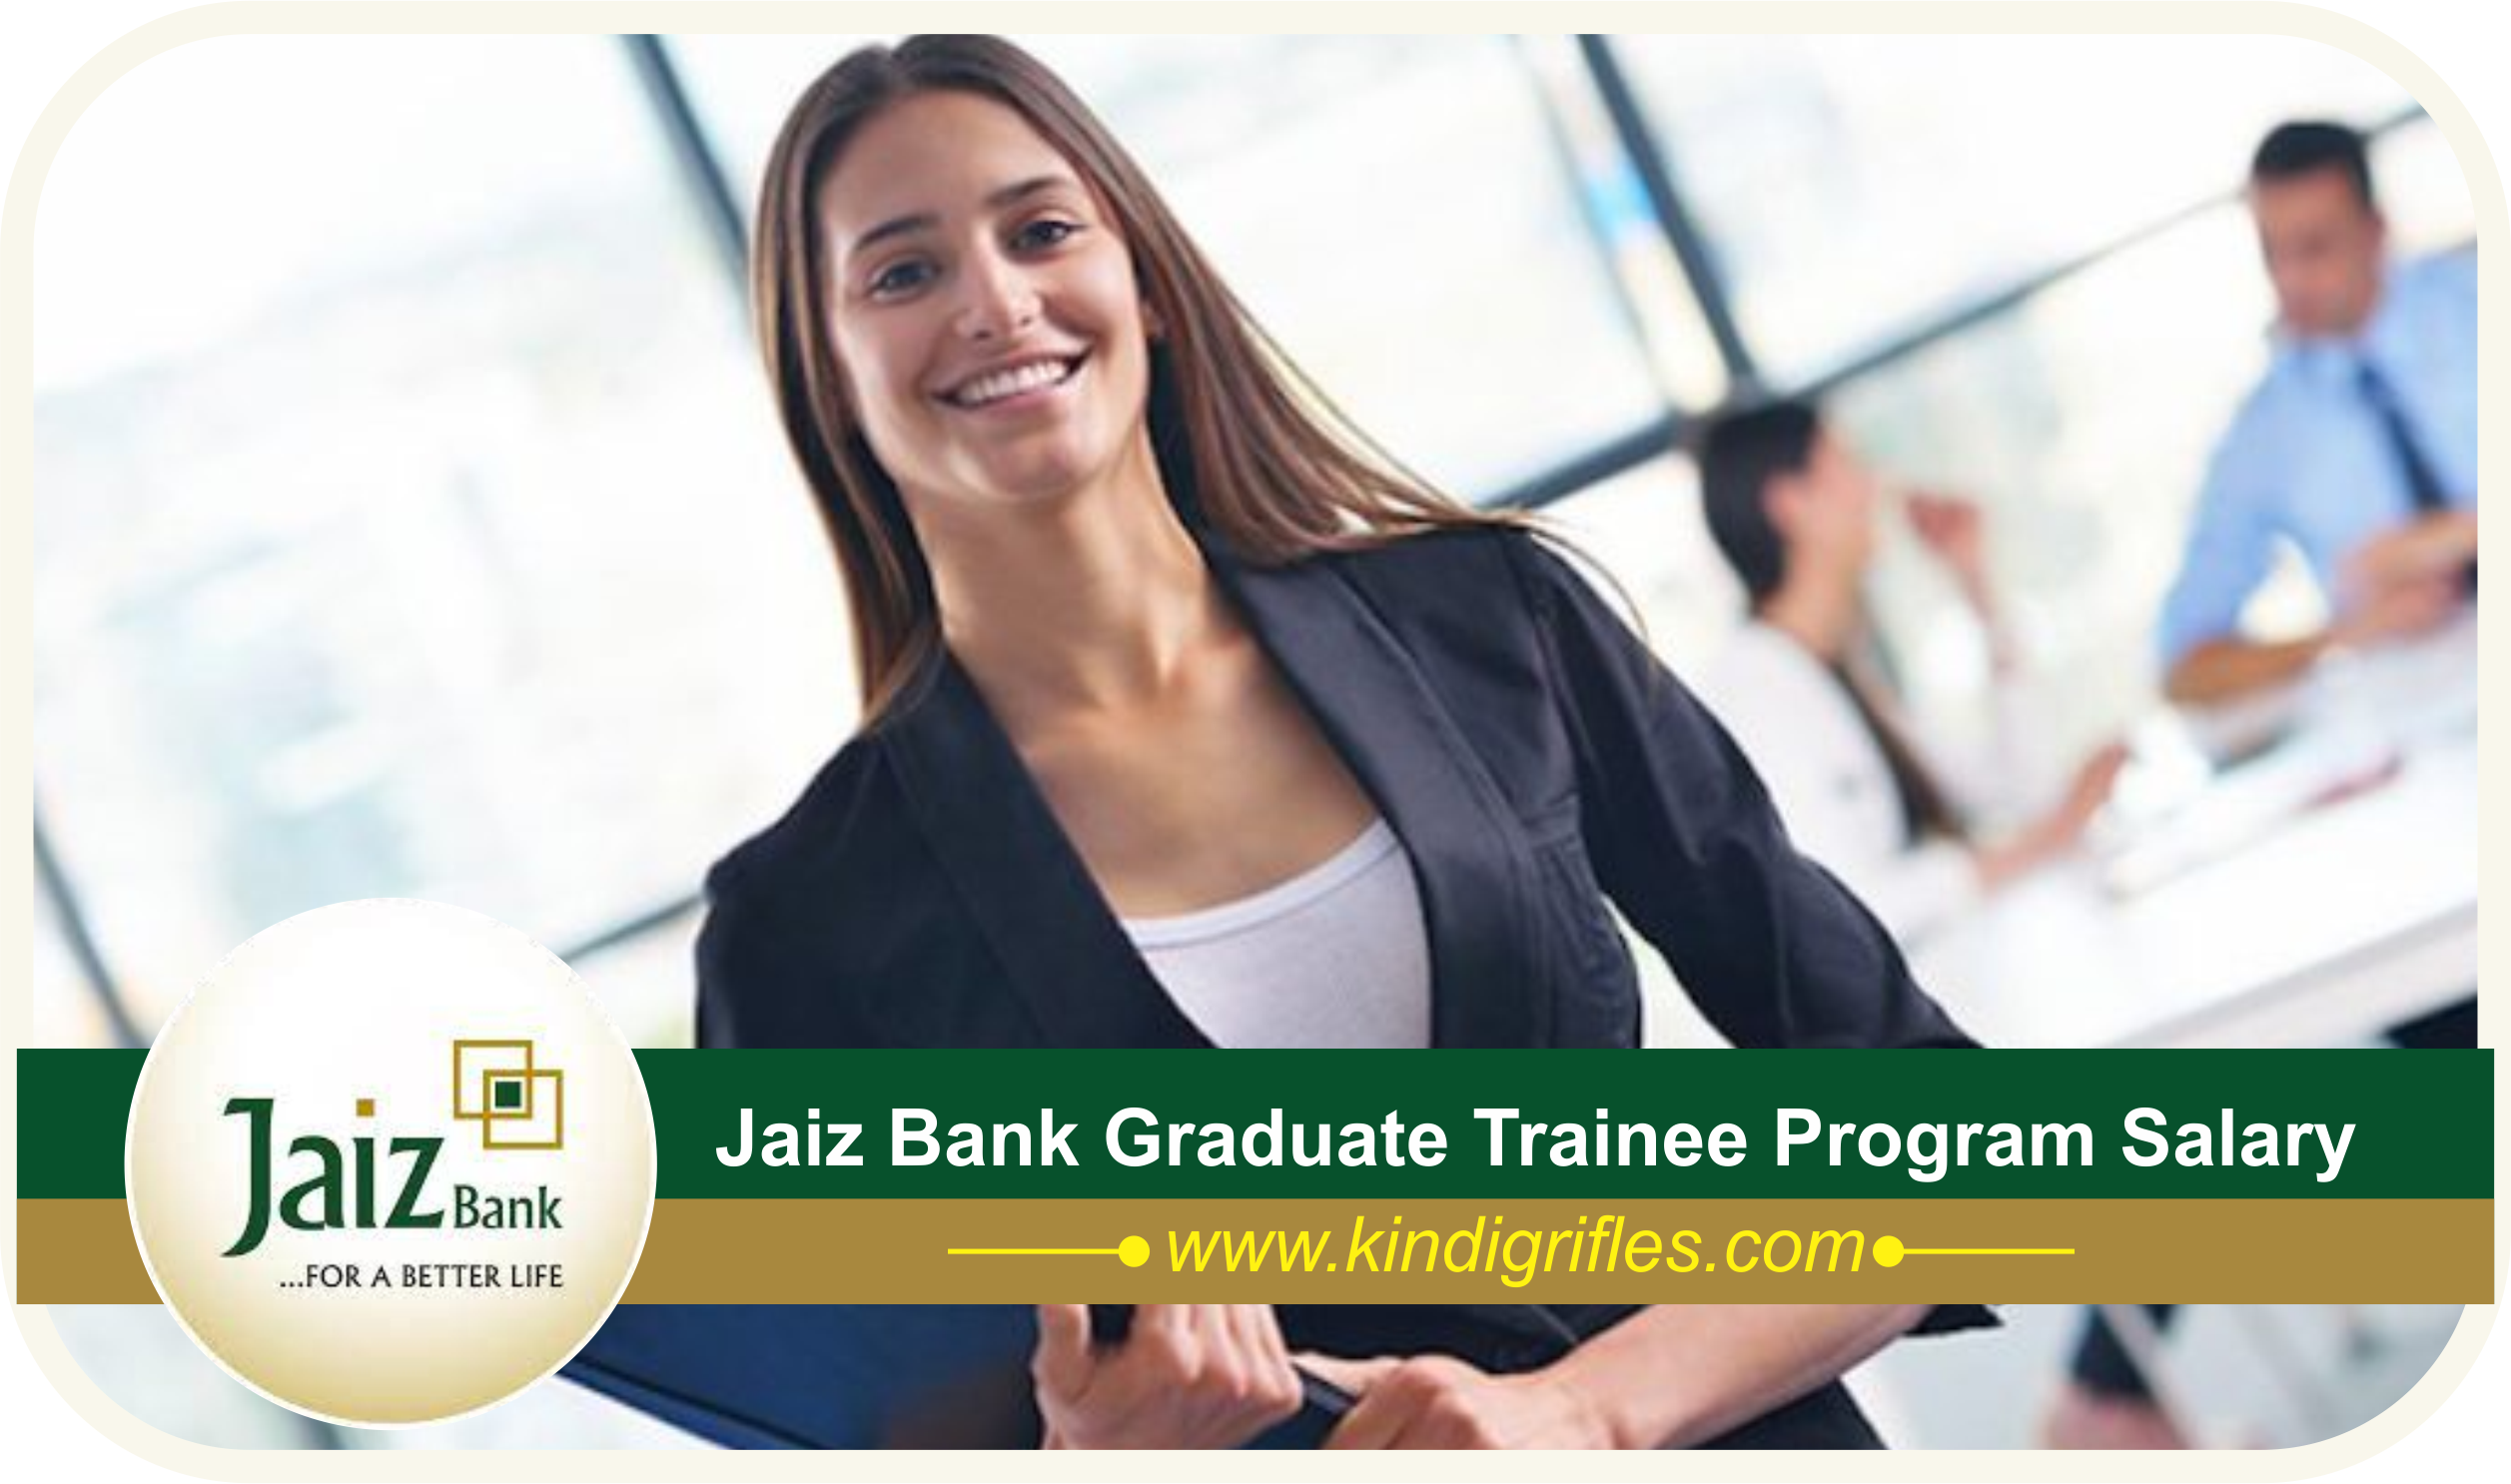 Jaiz Bank Graduate Trainee Program Salary